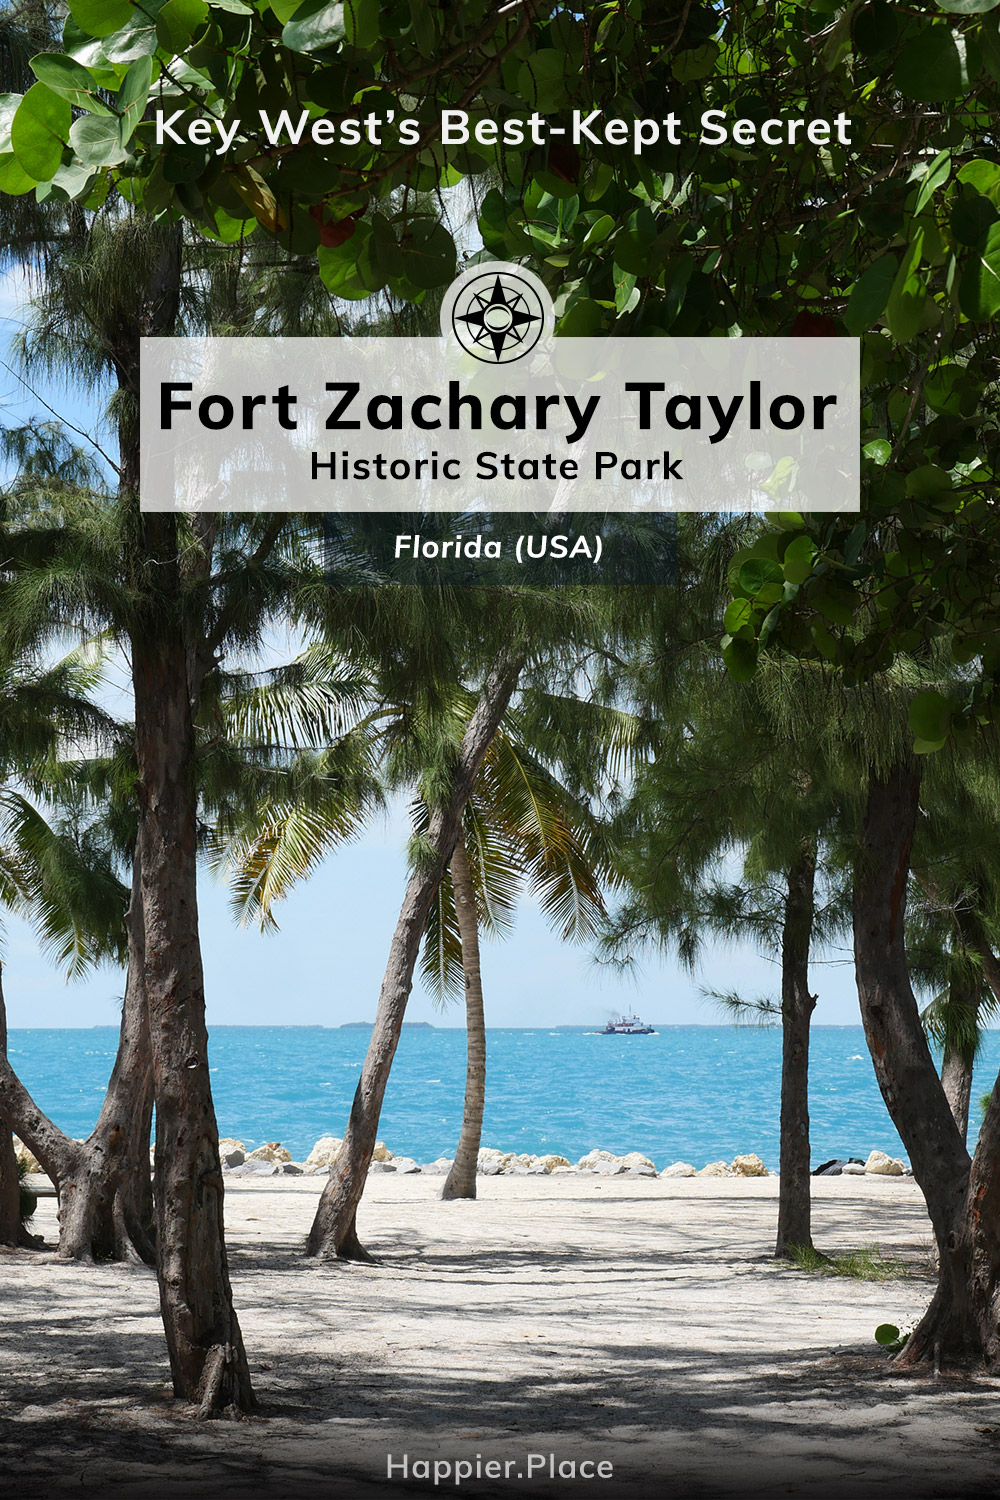 Fort Zachary Taylor Historic State Park, Key West's best-kept secret, Happier Place, Florida